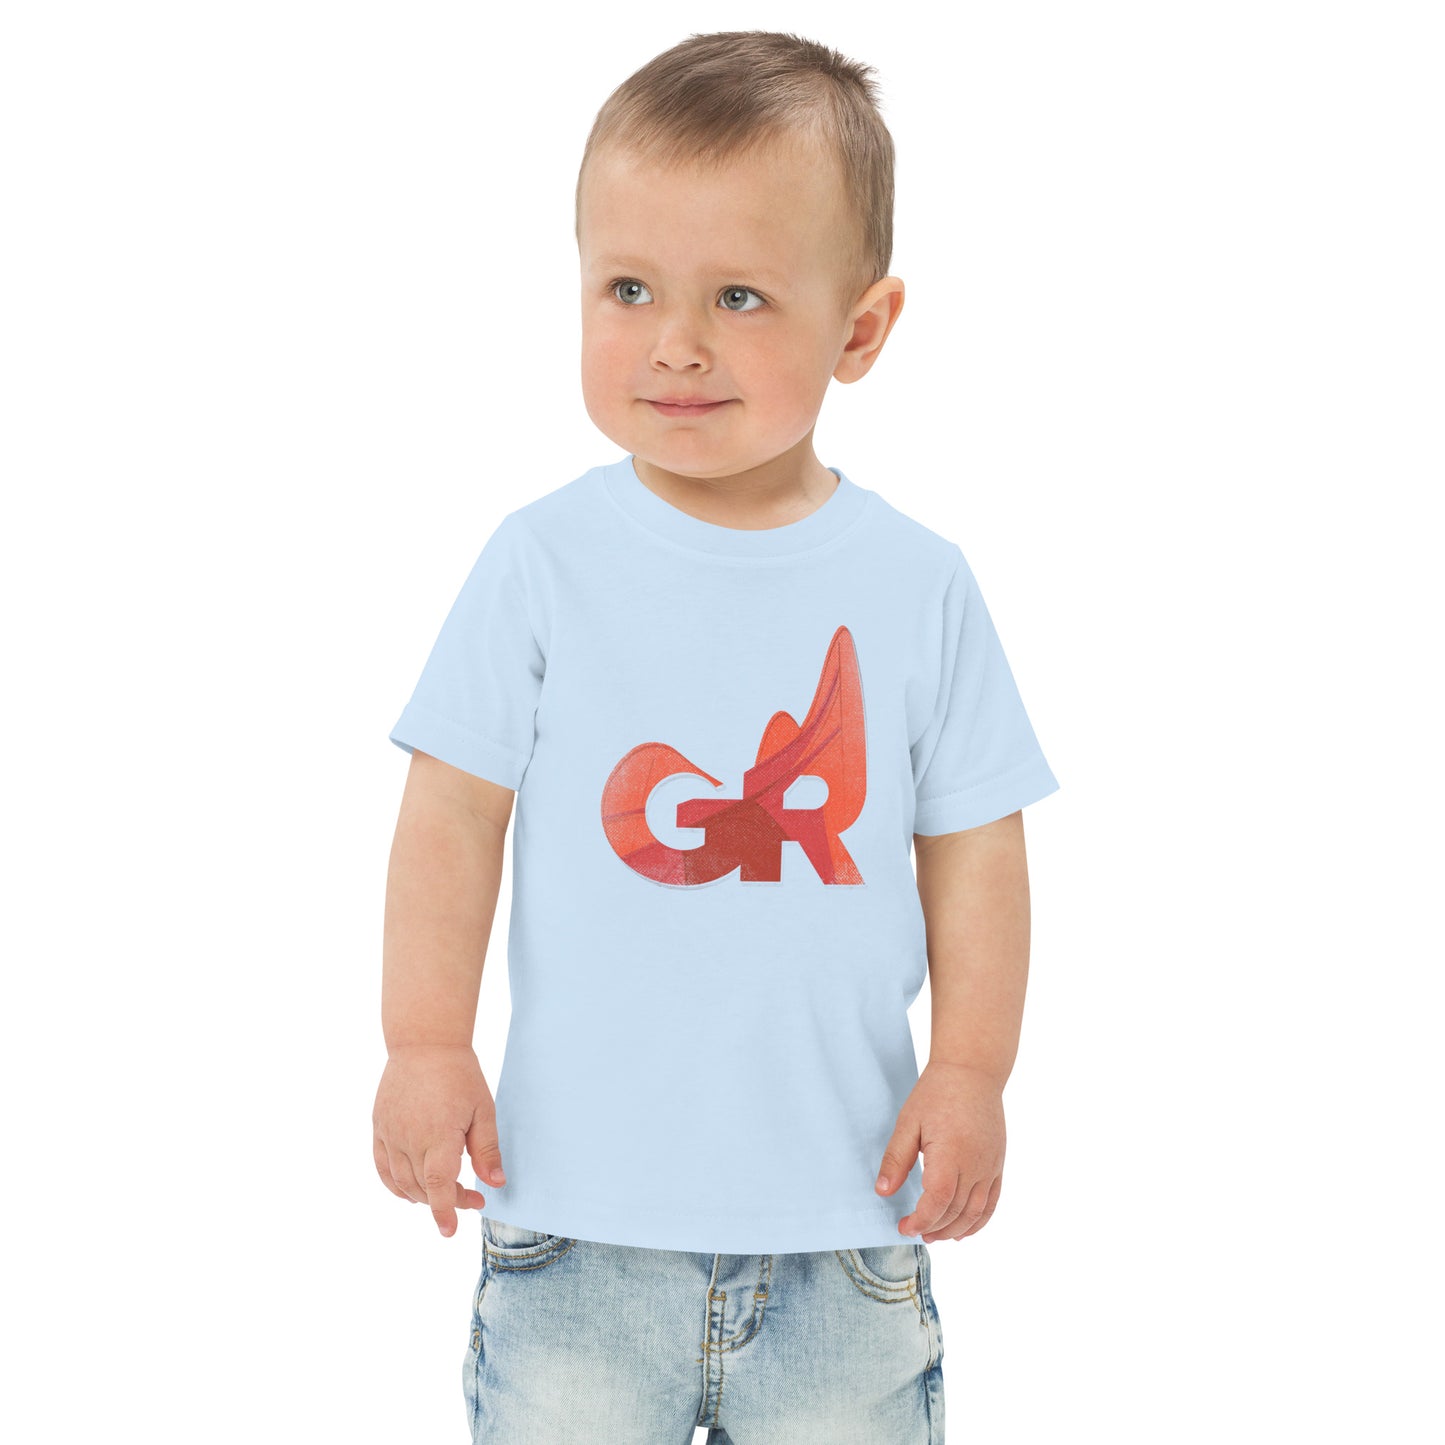 G.R. Toddler T-shirt